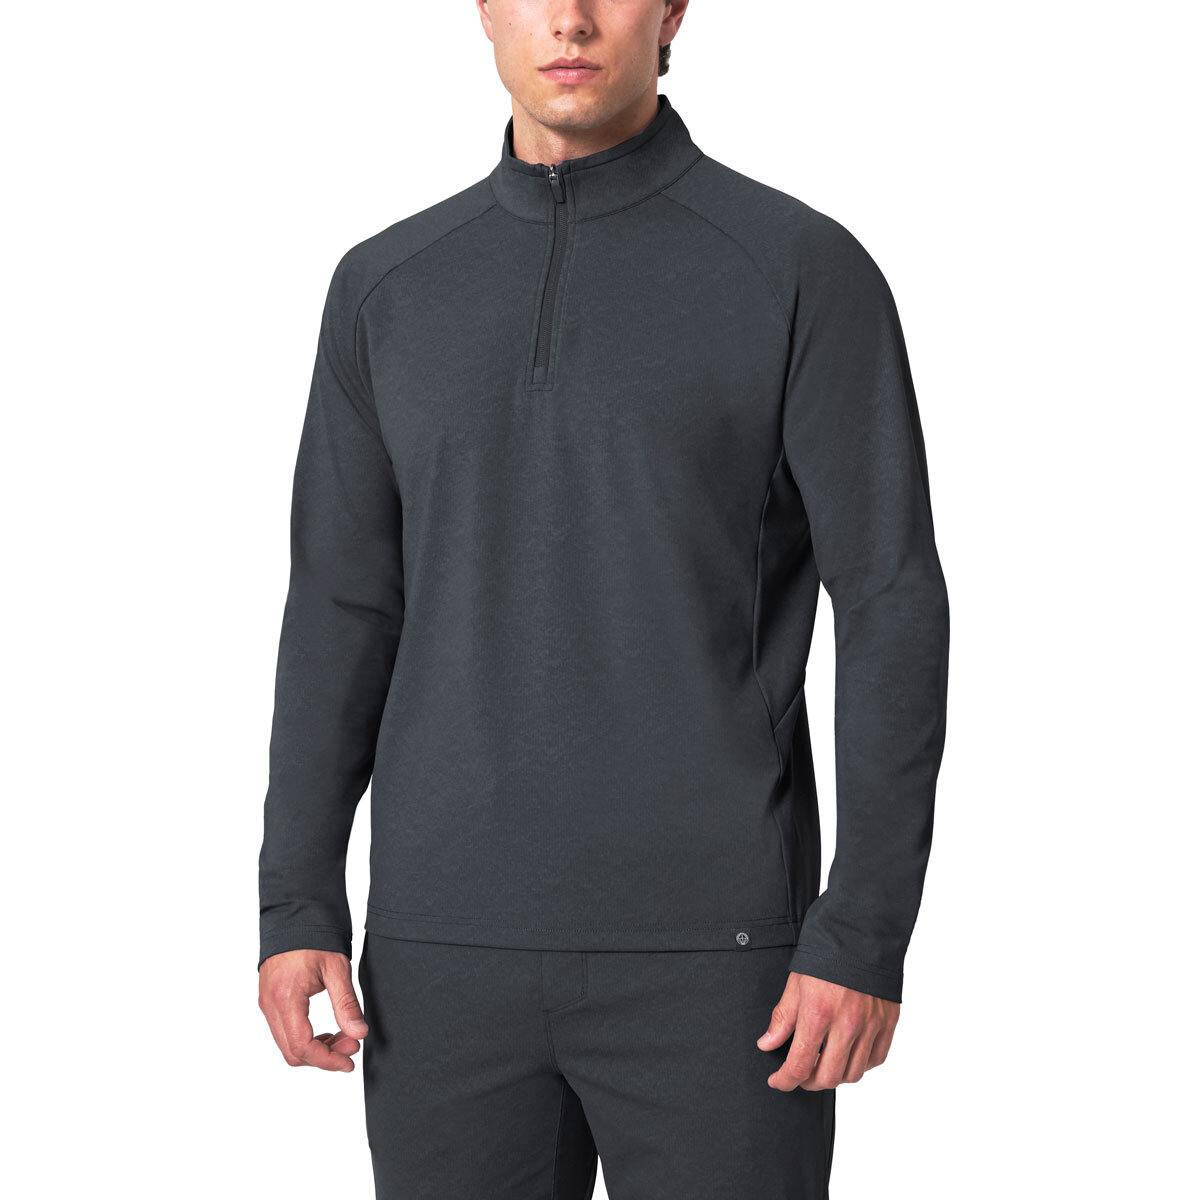 Mondetta Stature Quarter Zip Sweatshirt in Black - Large